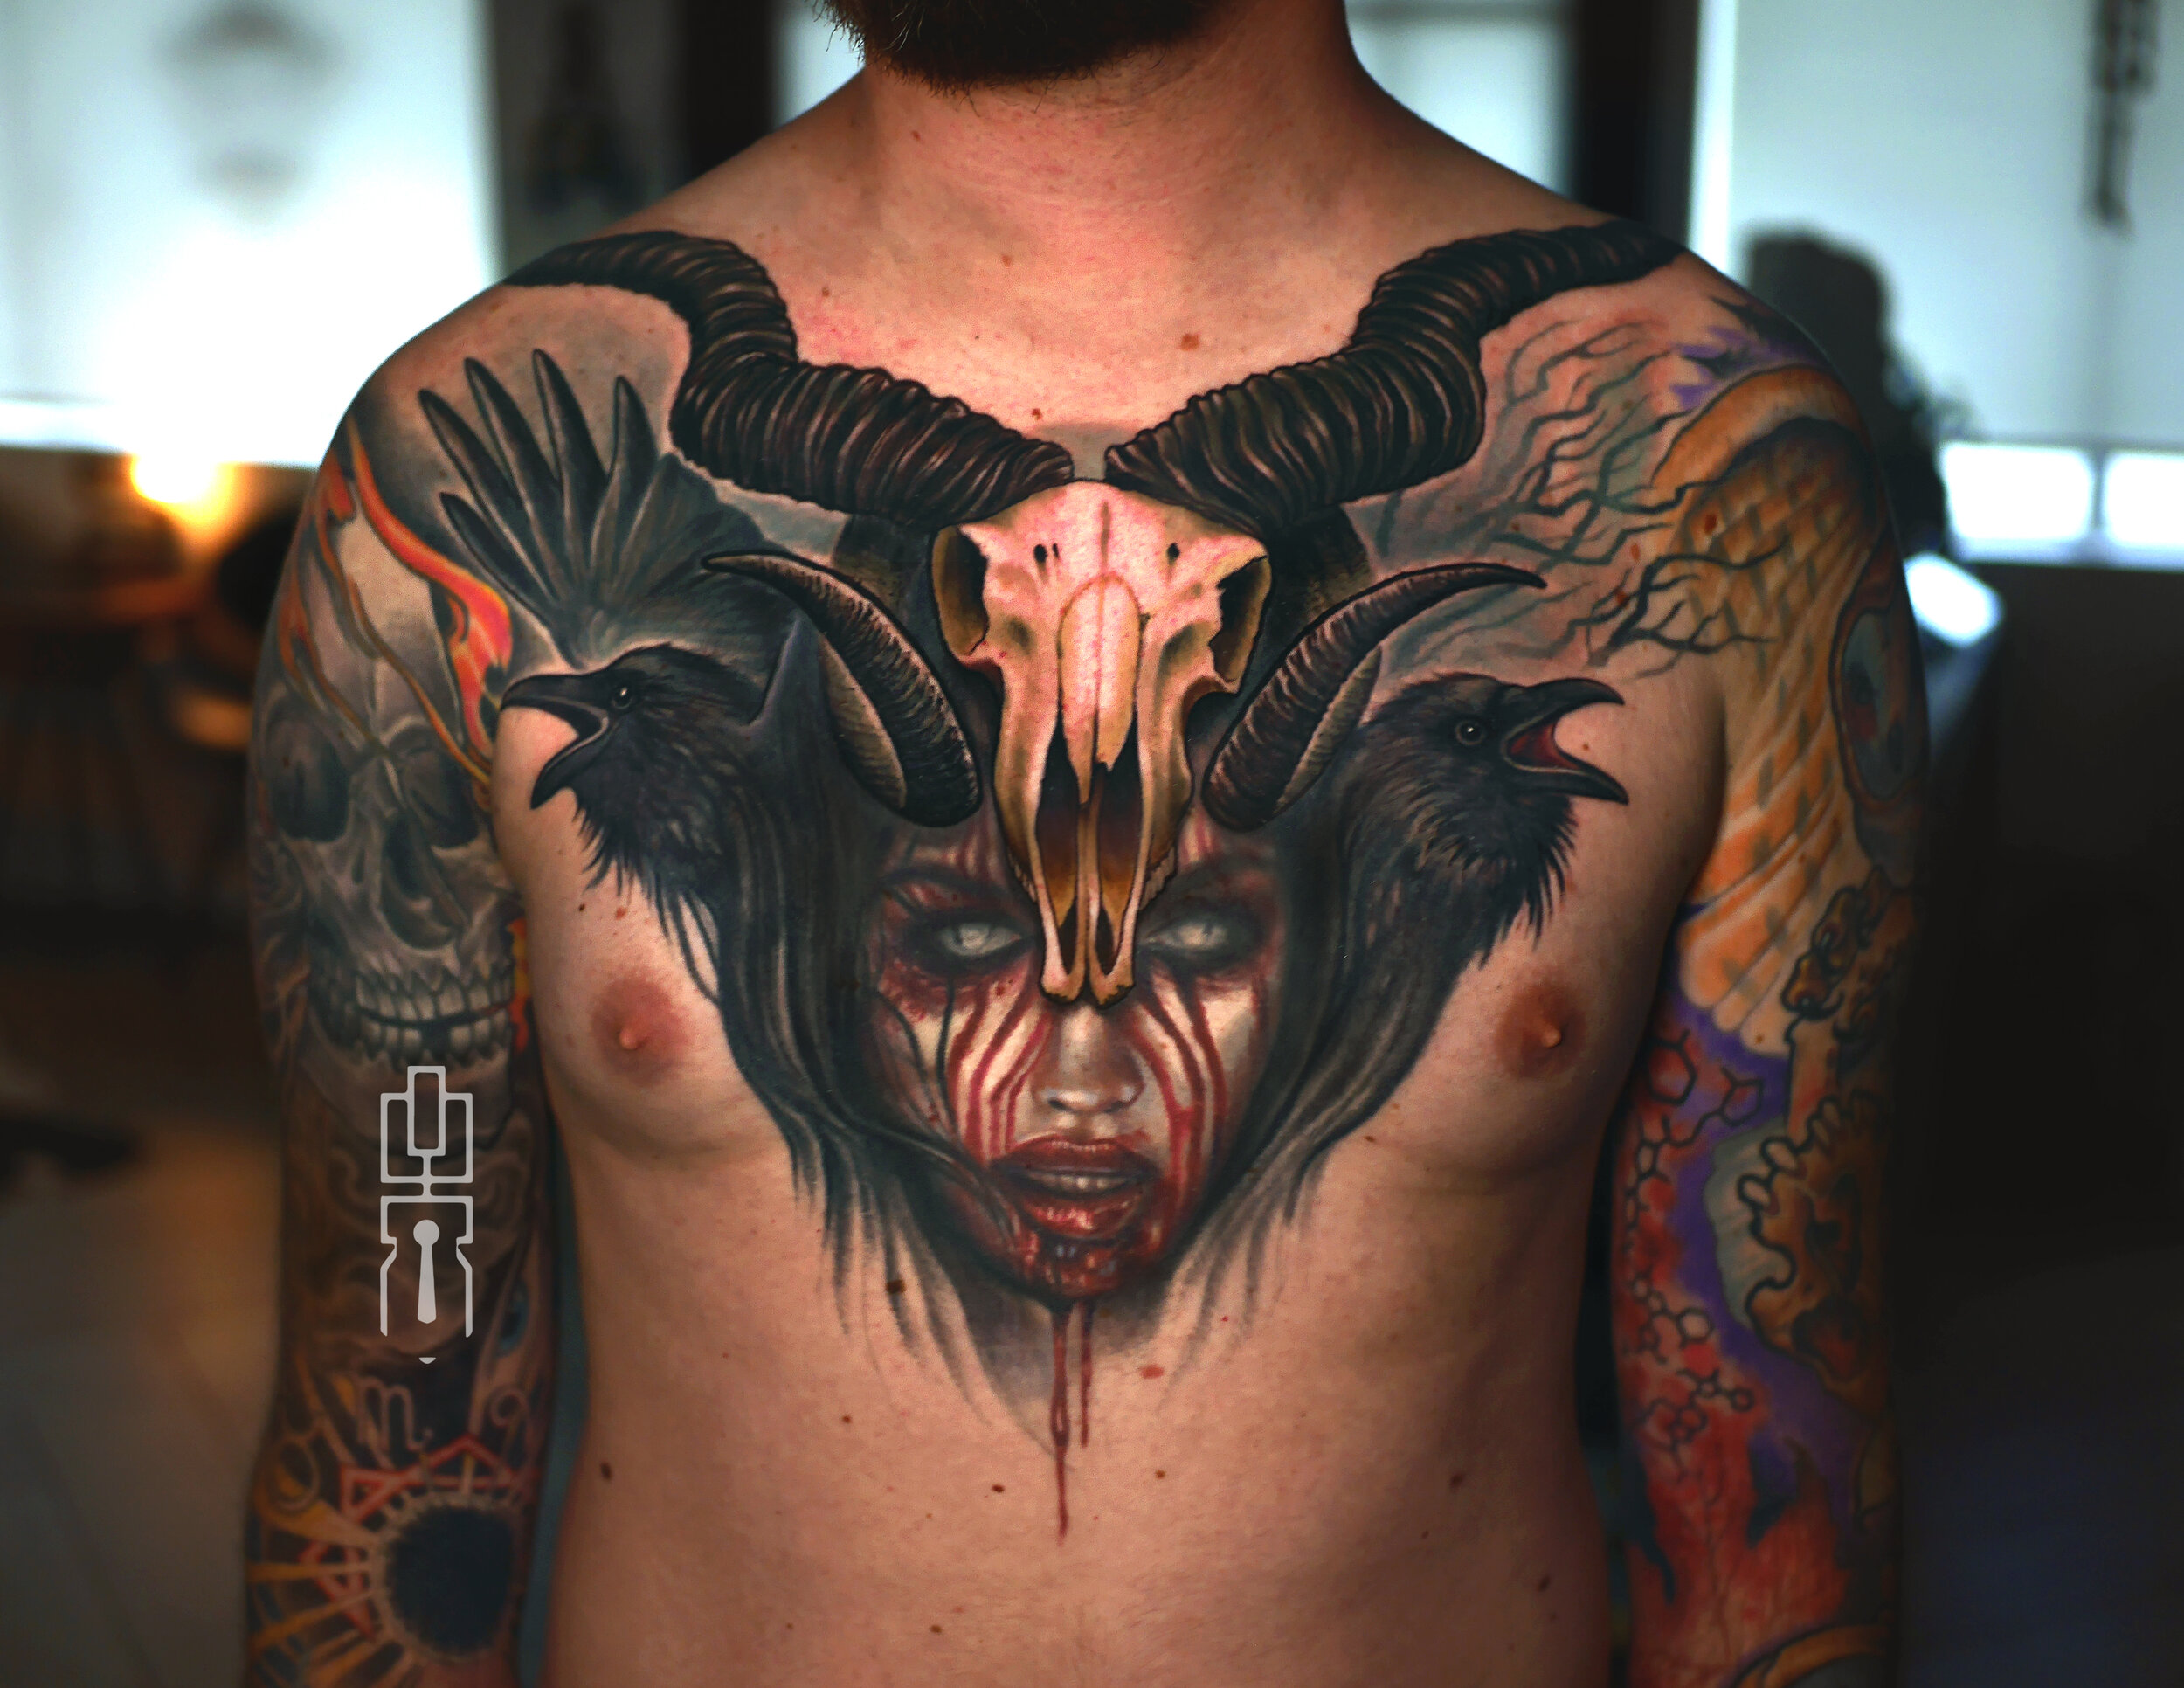 metal witch goat skull chest piece tattoo.jpg